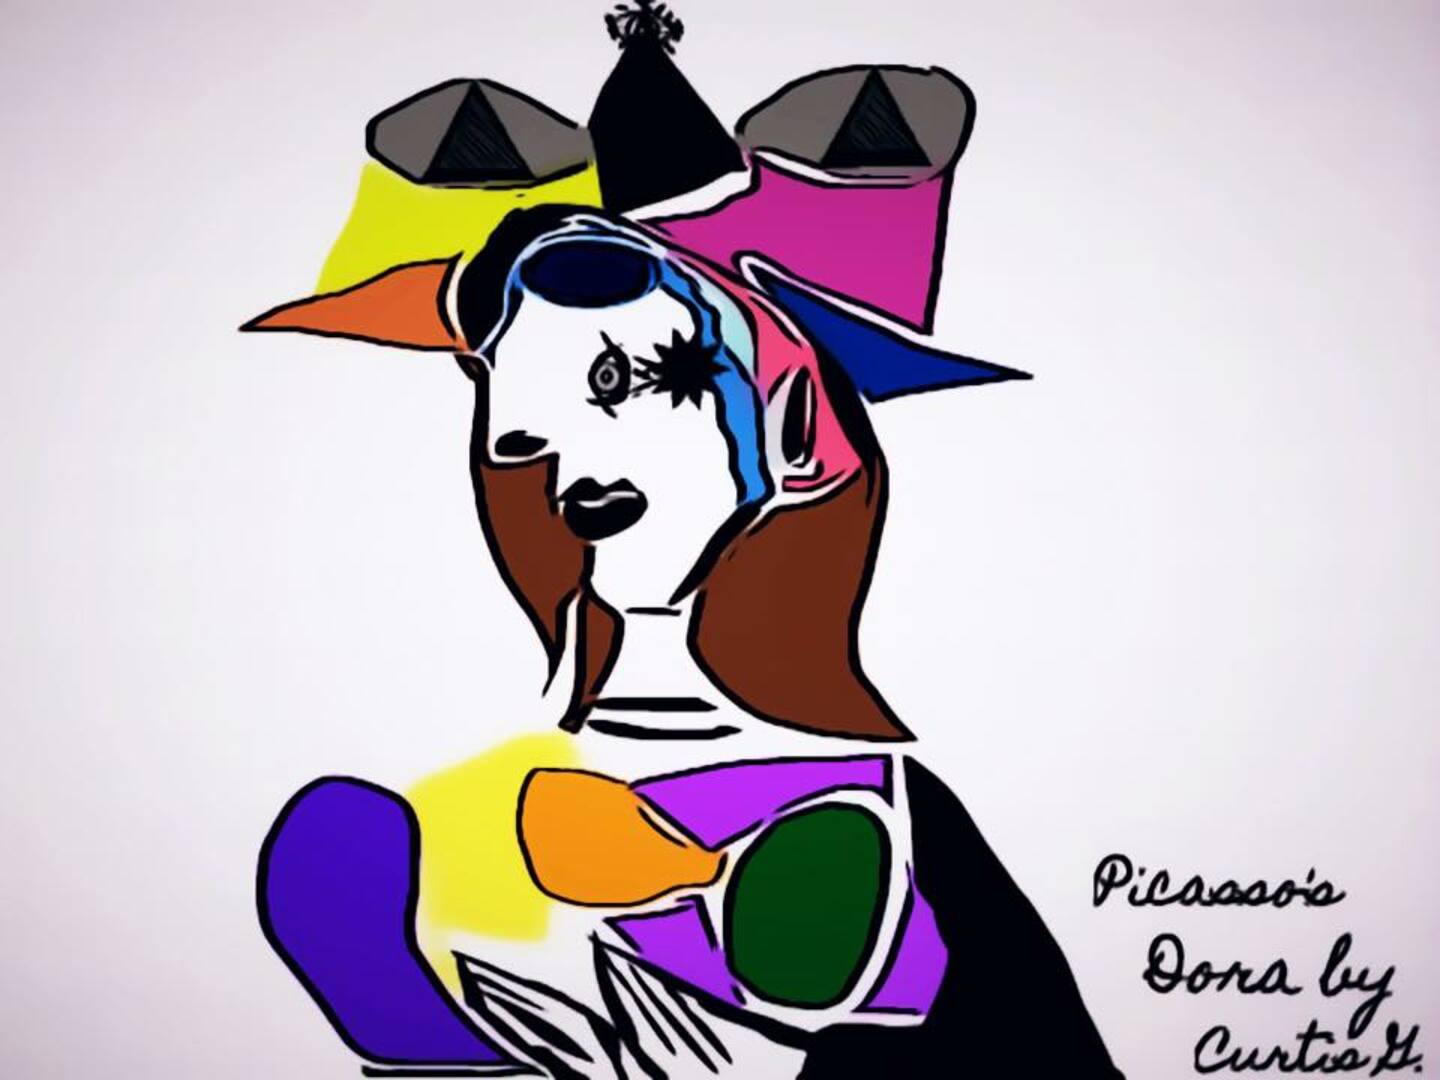 Picasso's Dora by Curtis G. - NFT